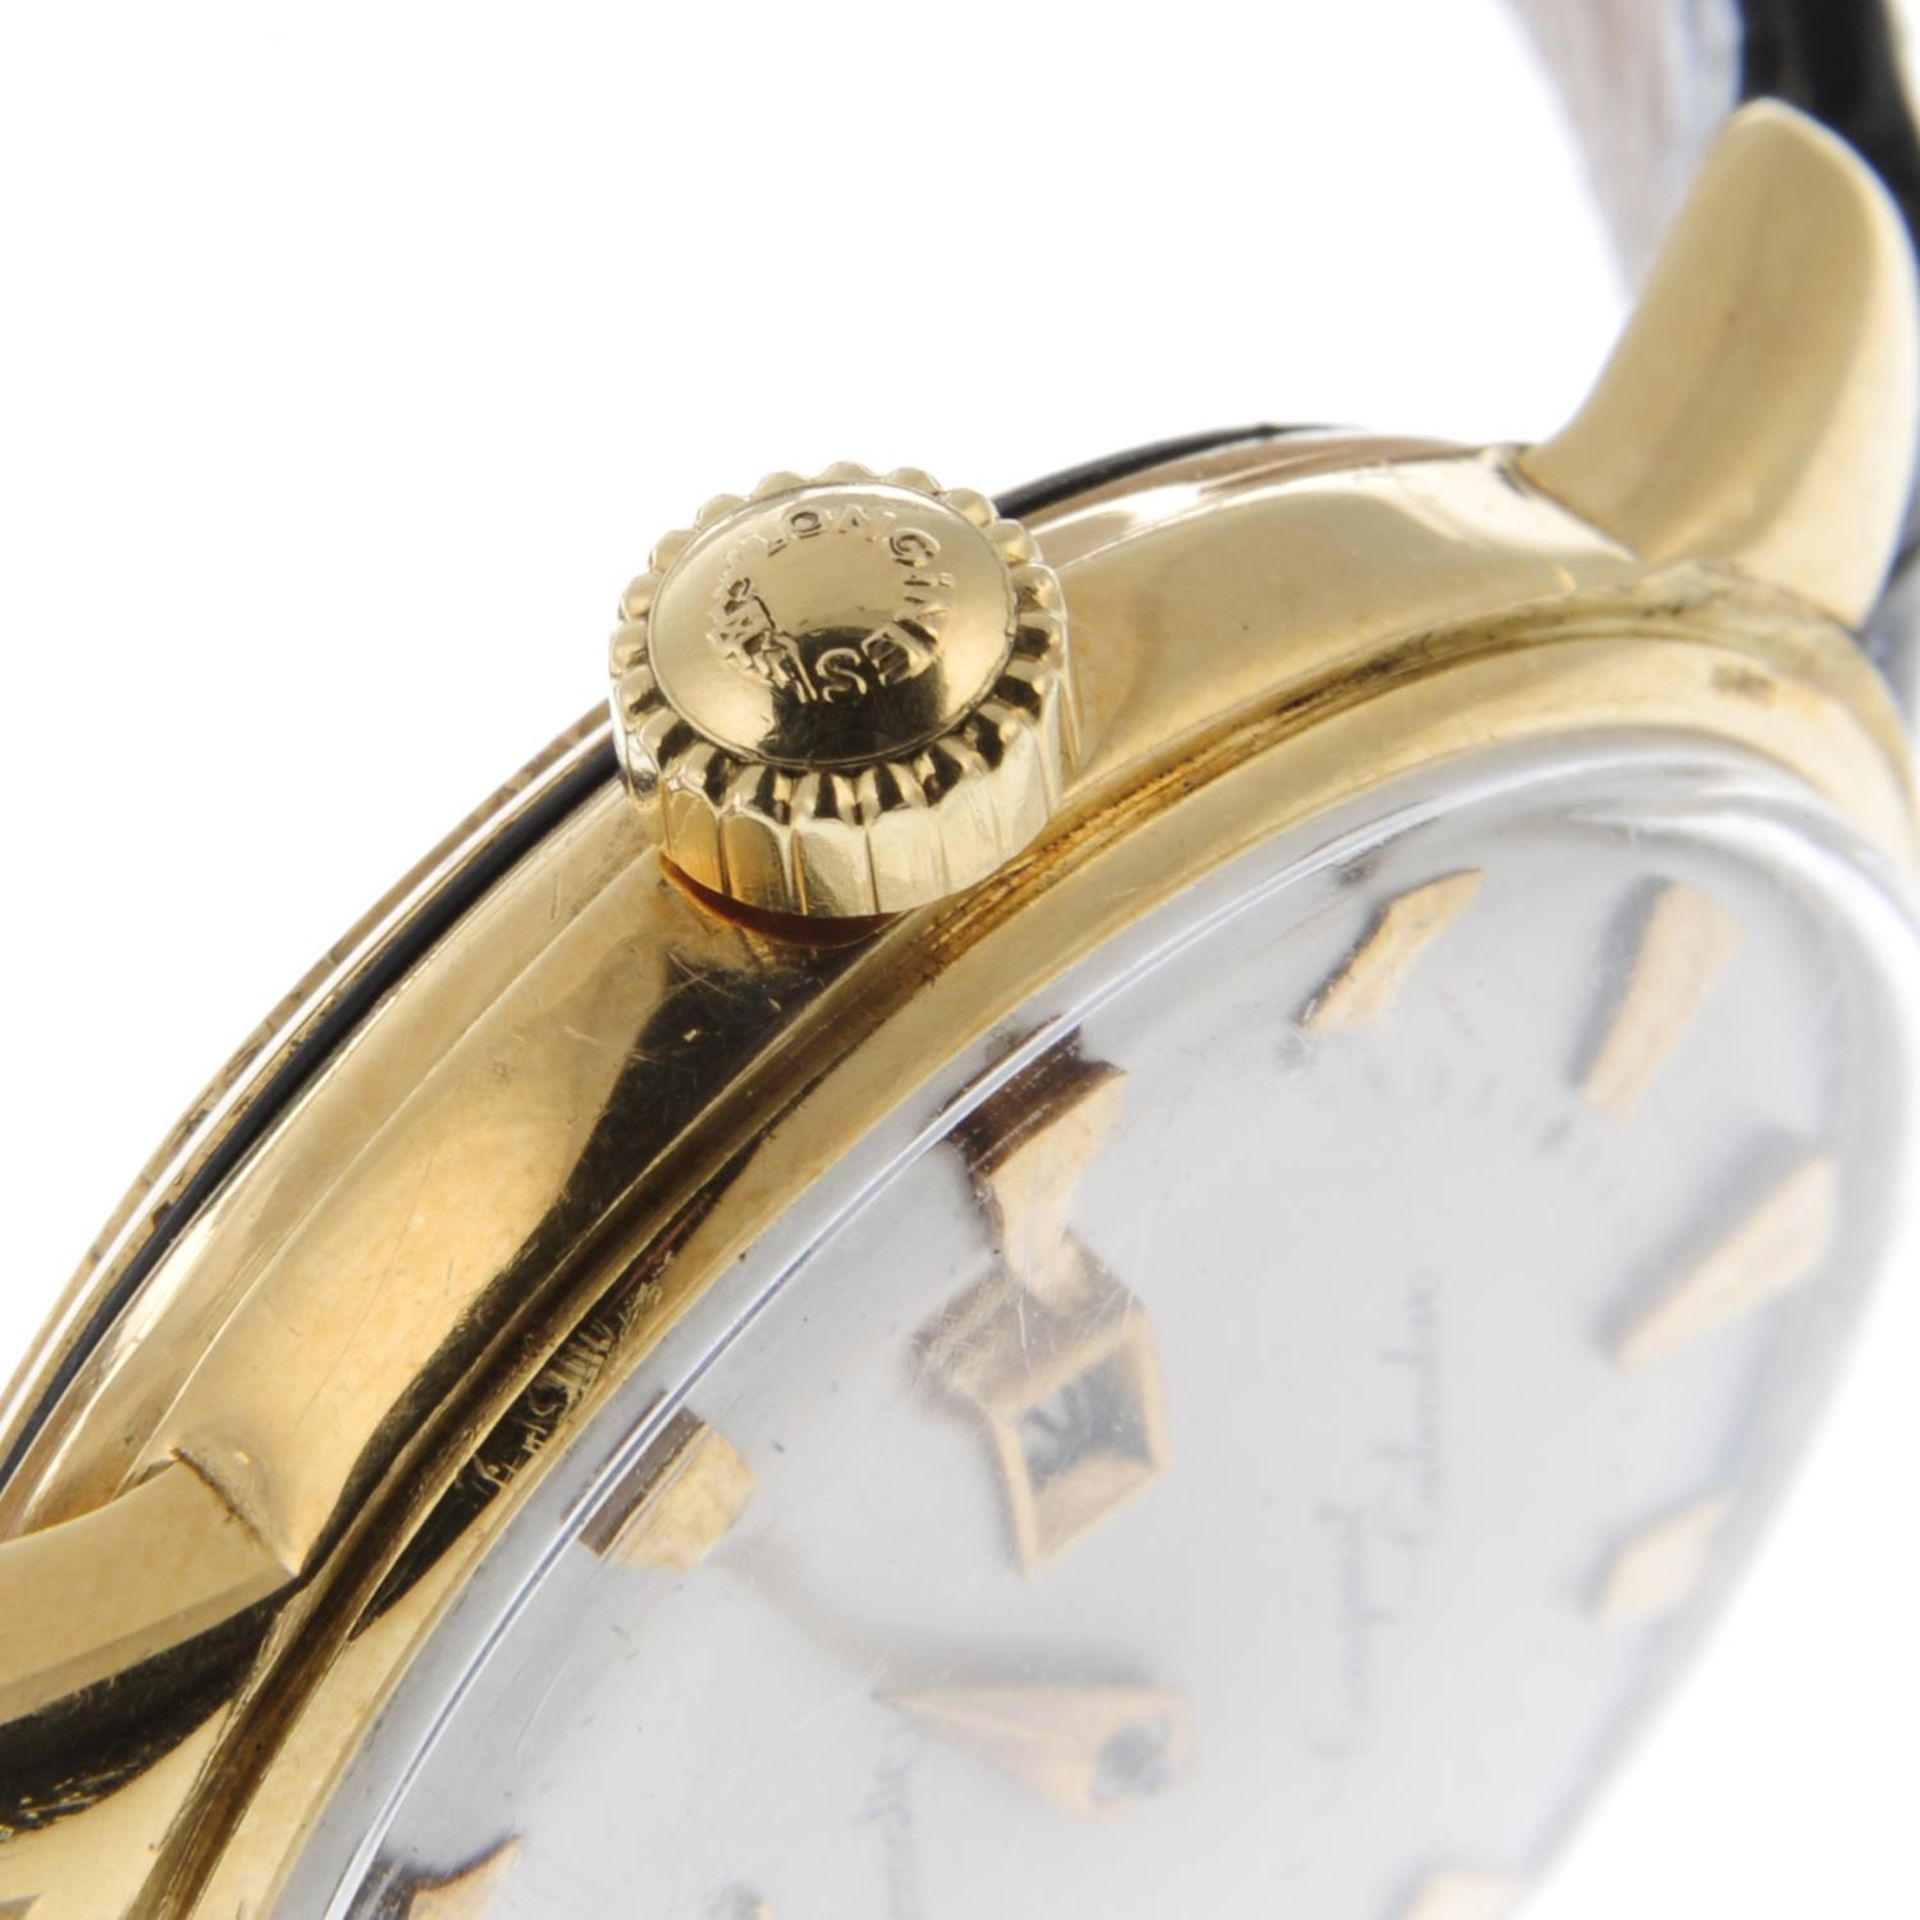 LONGINES - a gentleman's Conquest Calendar wrist watch. - Image 4 of 4